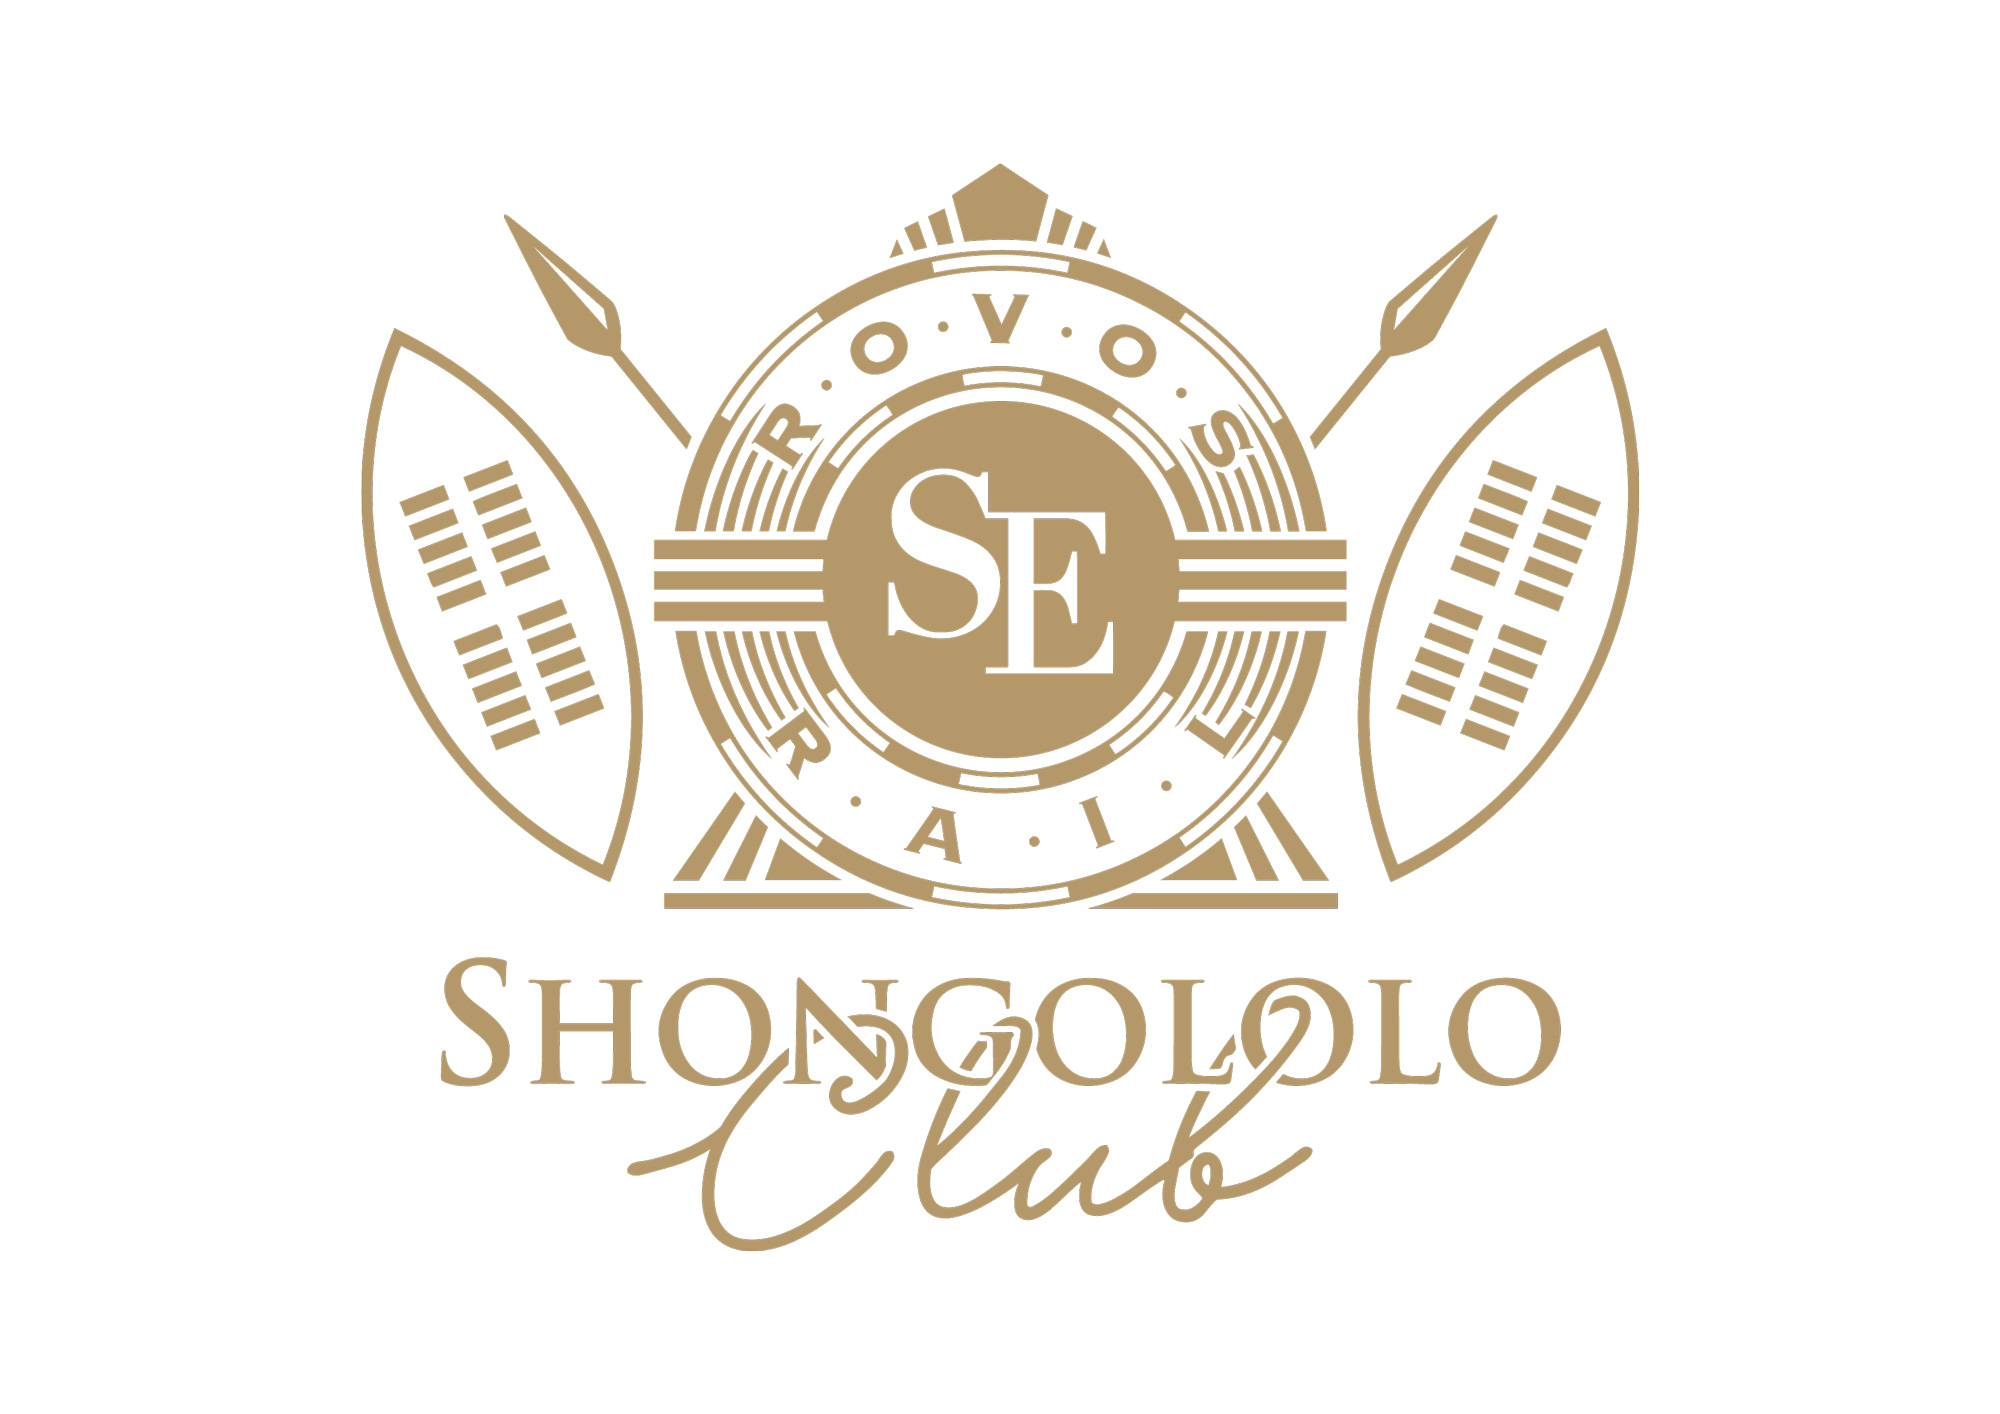 Shongololo Club logotyp.